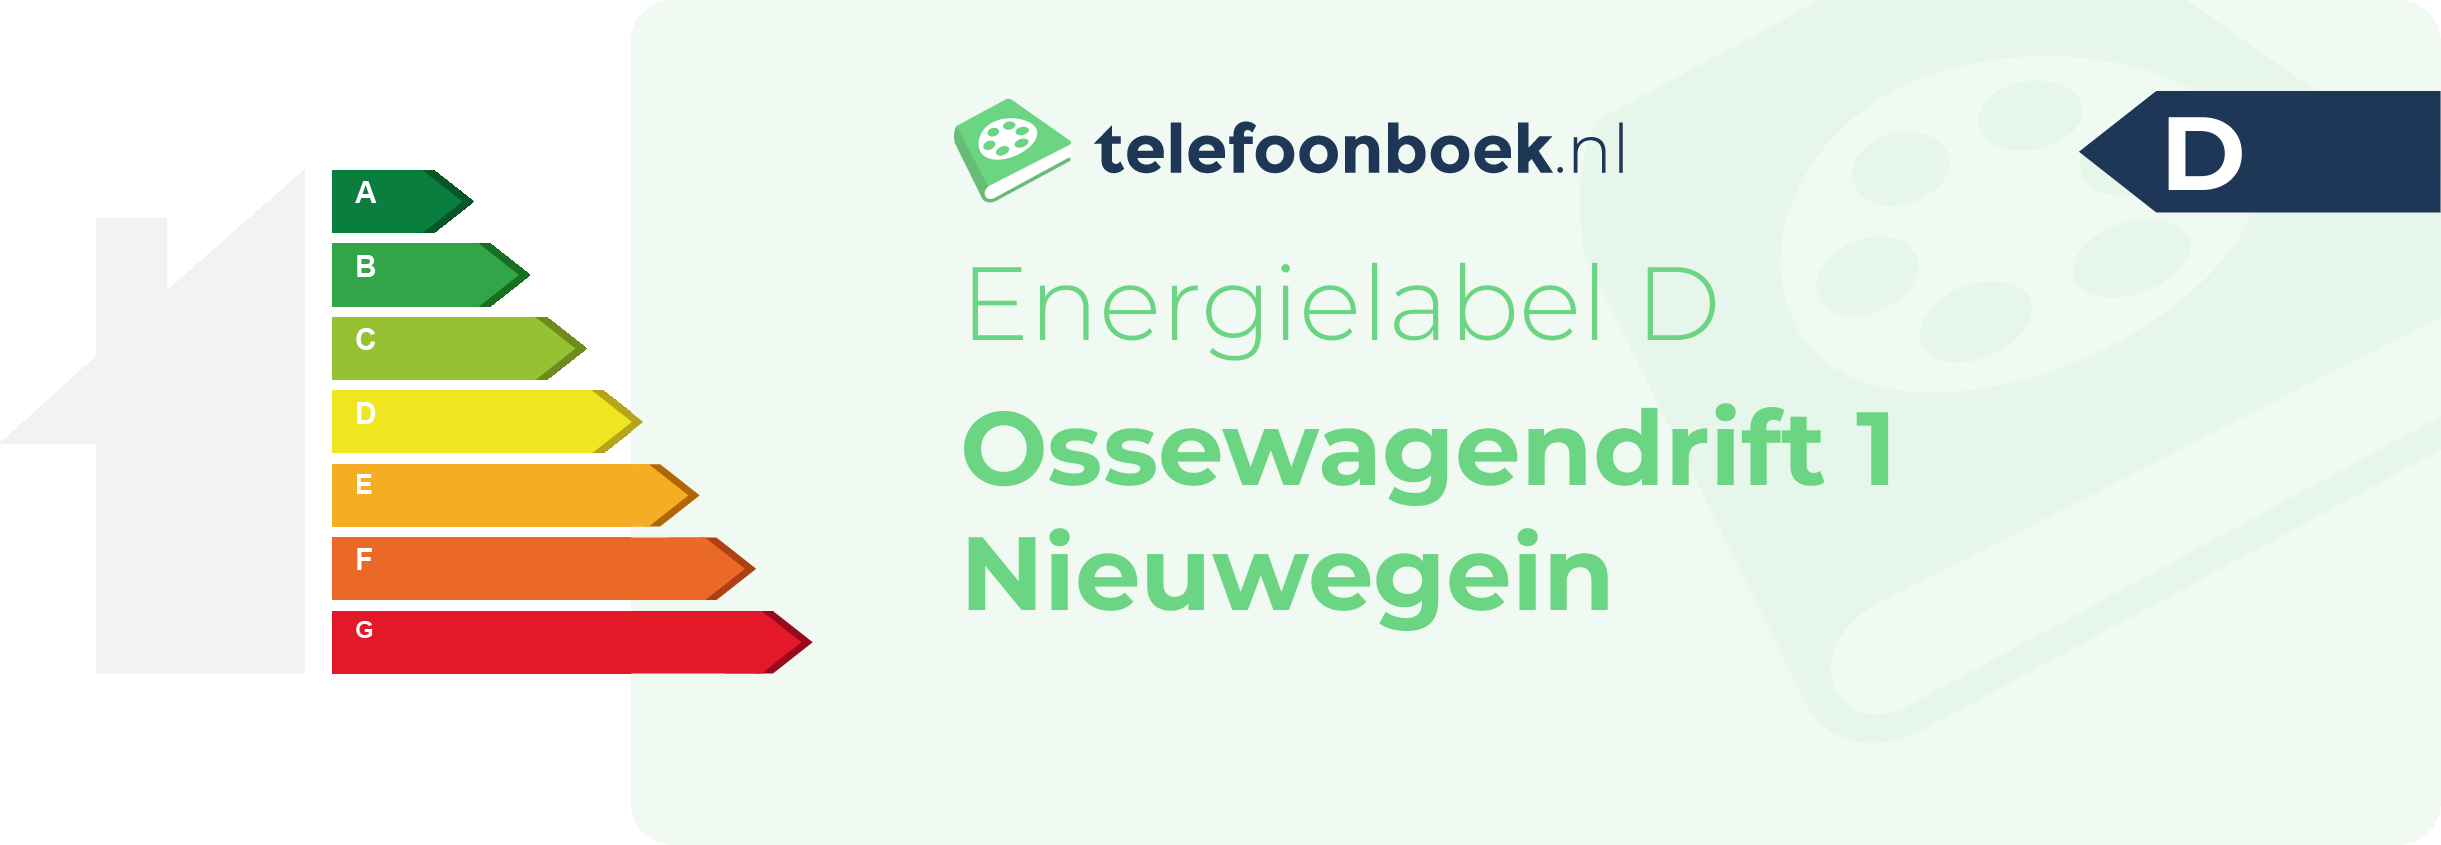 Energielabel Ossewagendrift 1 Nieuwegein